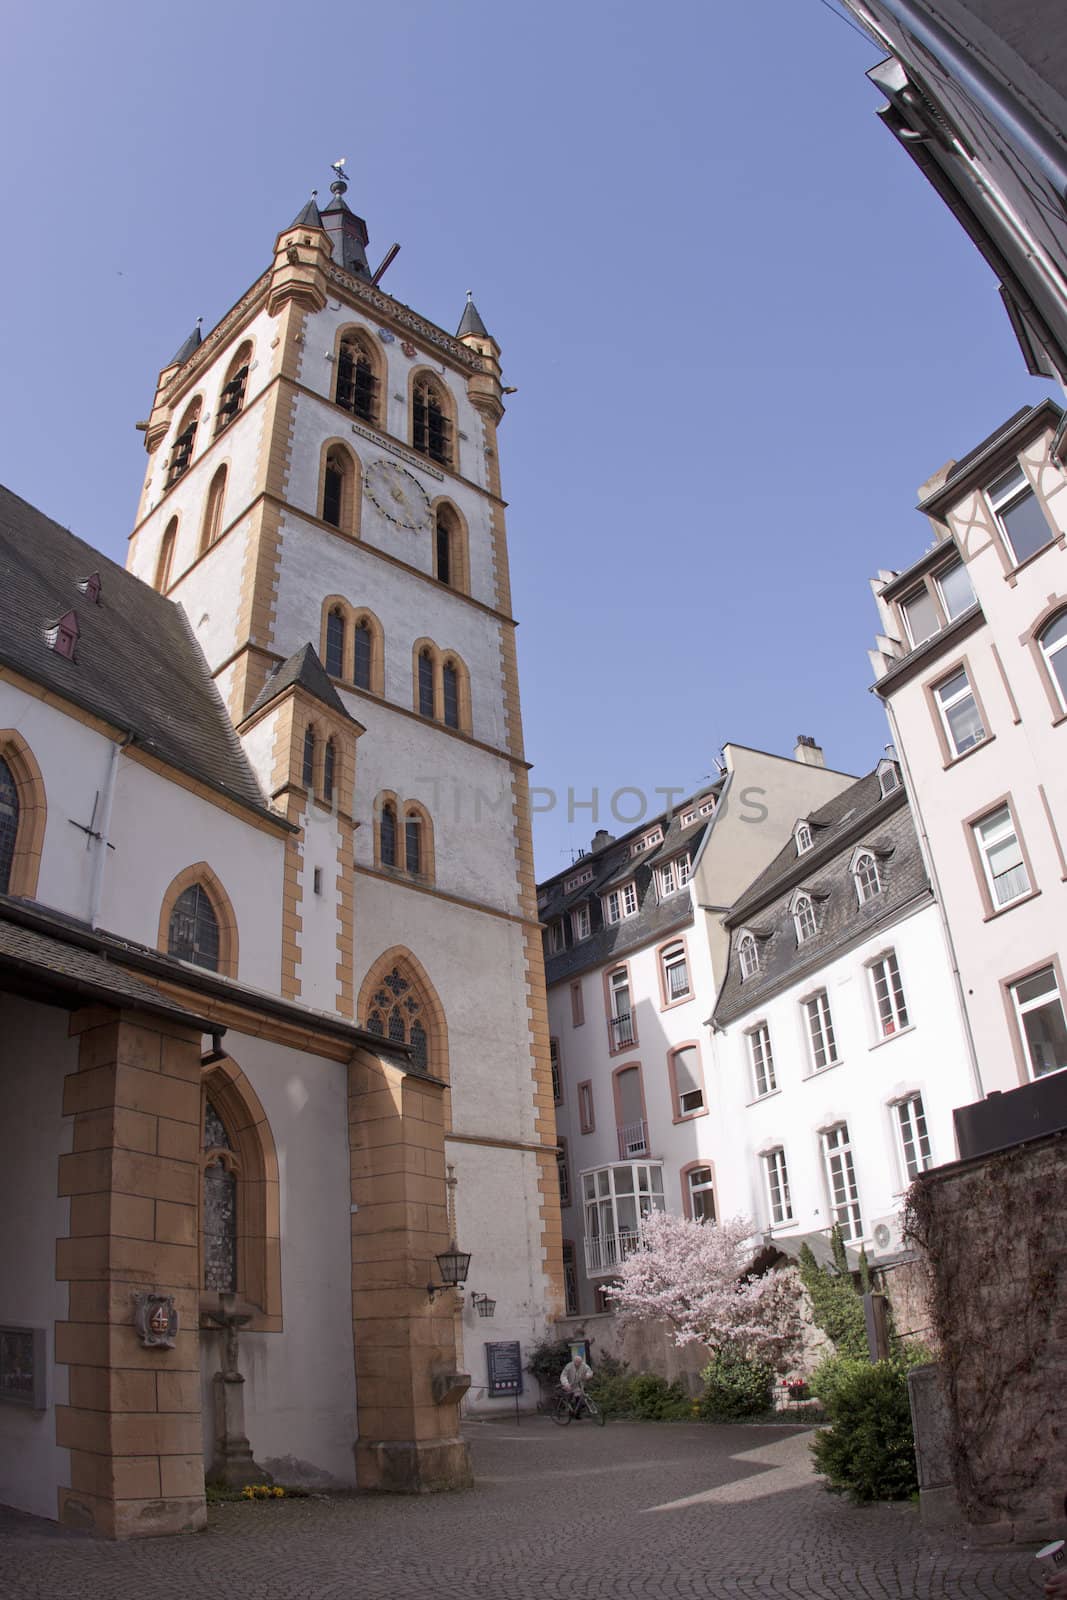 St. Gangolf Church in Trier